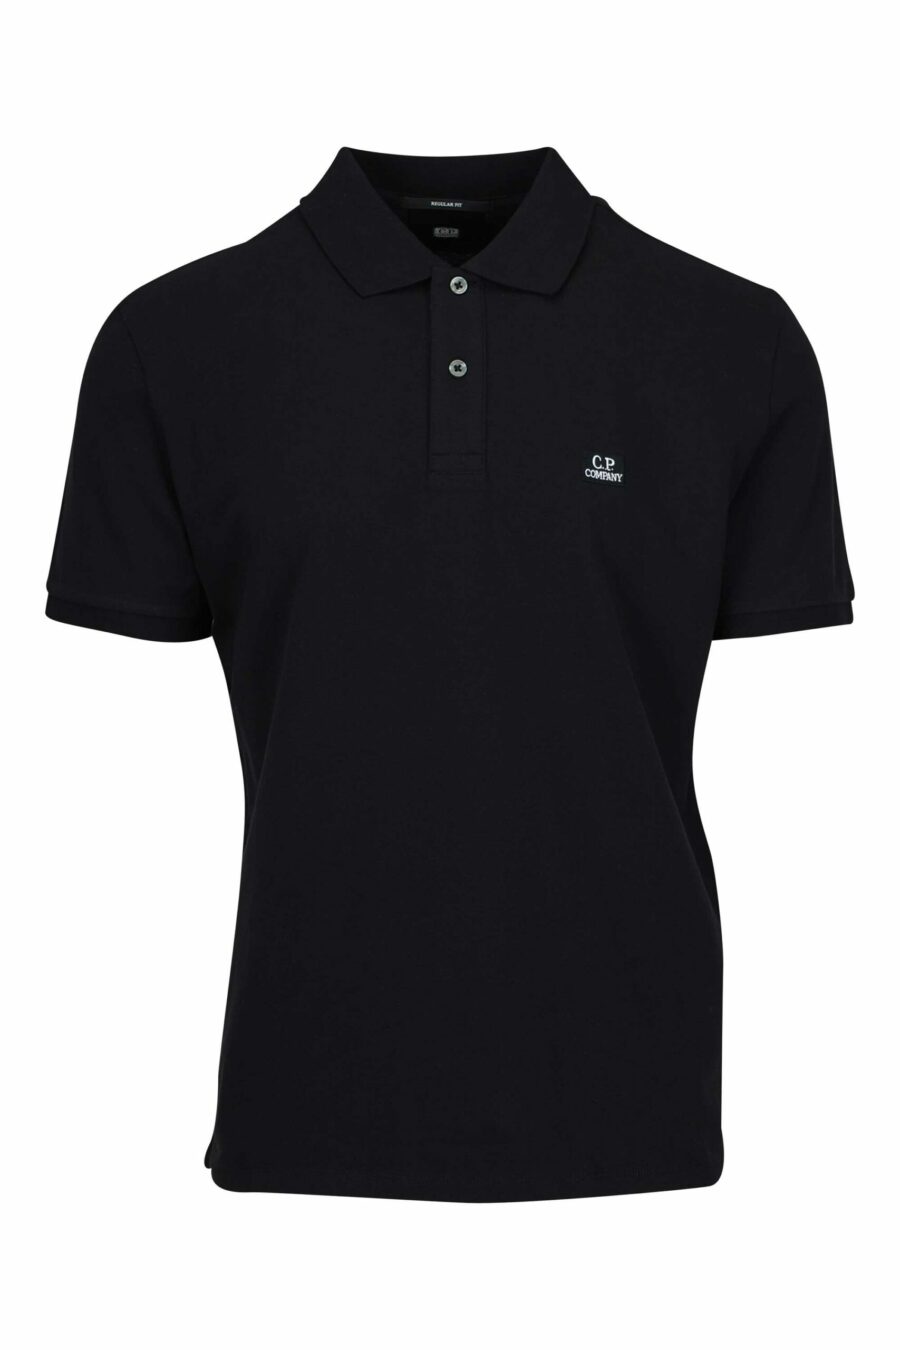 Schwarzes Poloshirt mit Mini-Logoaufnäher "cp" - 7620943728811 skaliert